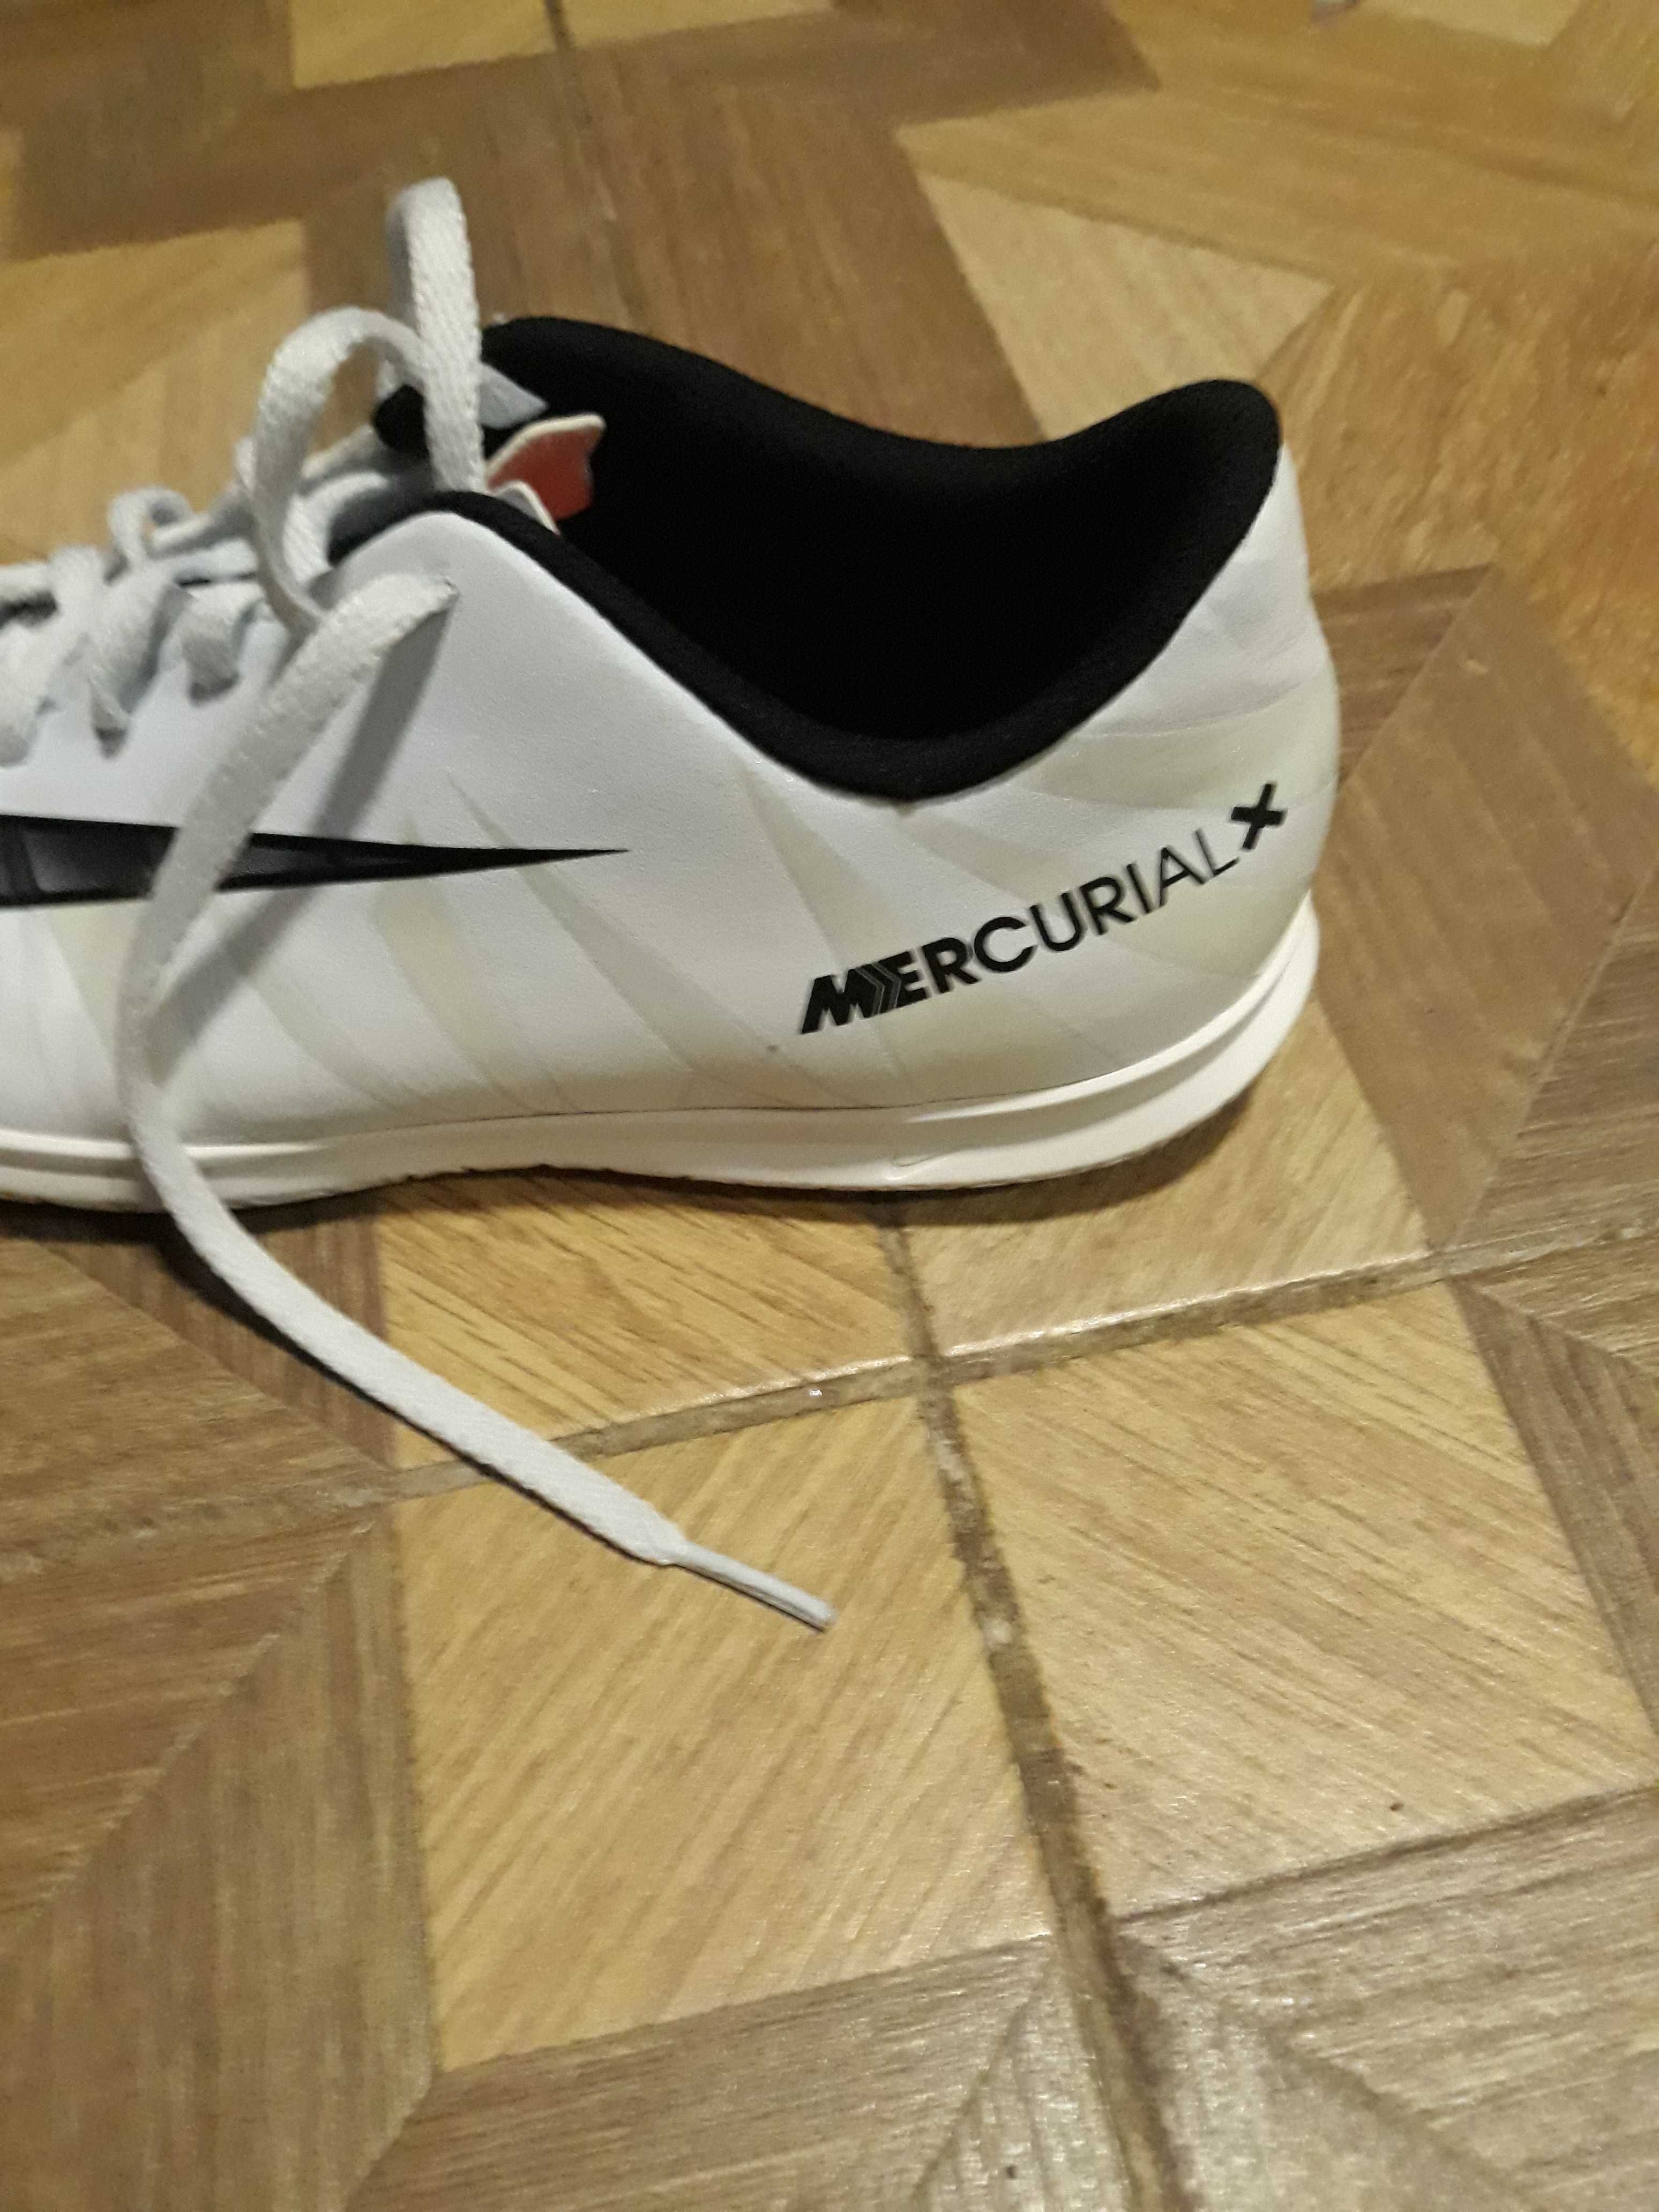 Nike Mercurial X CR7. Adidas boost